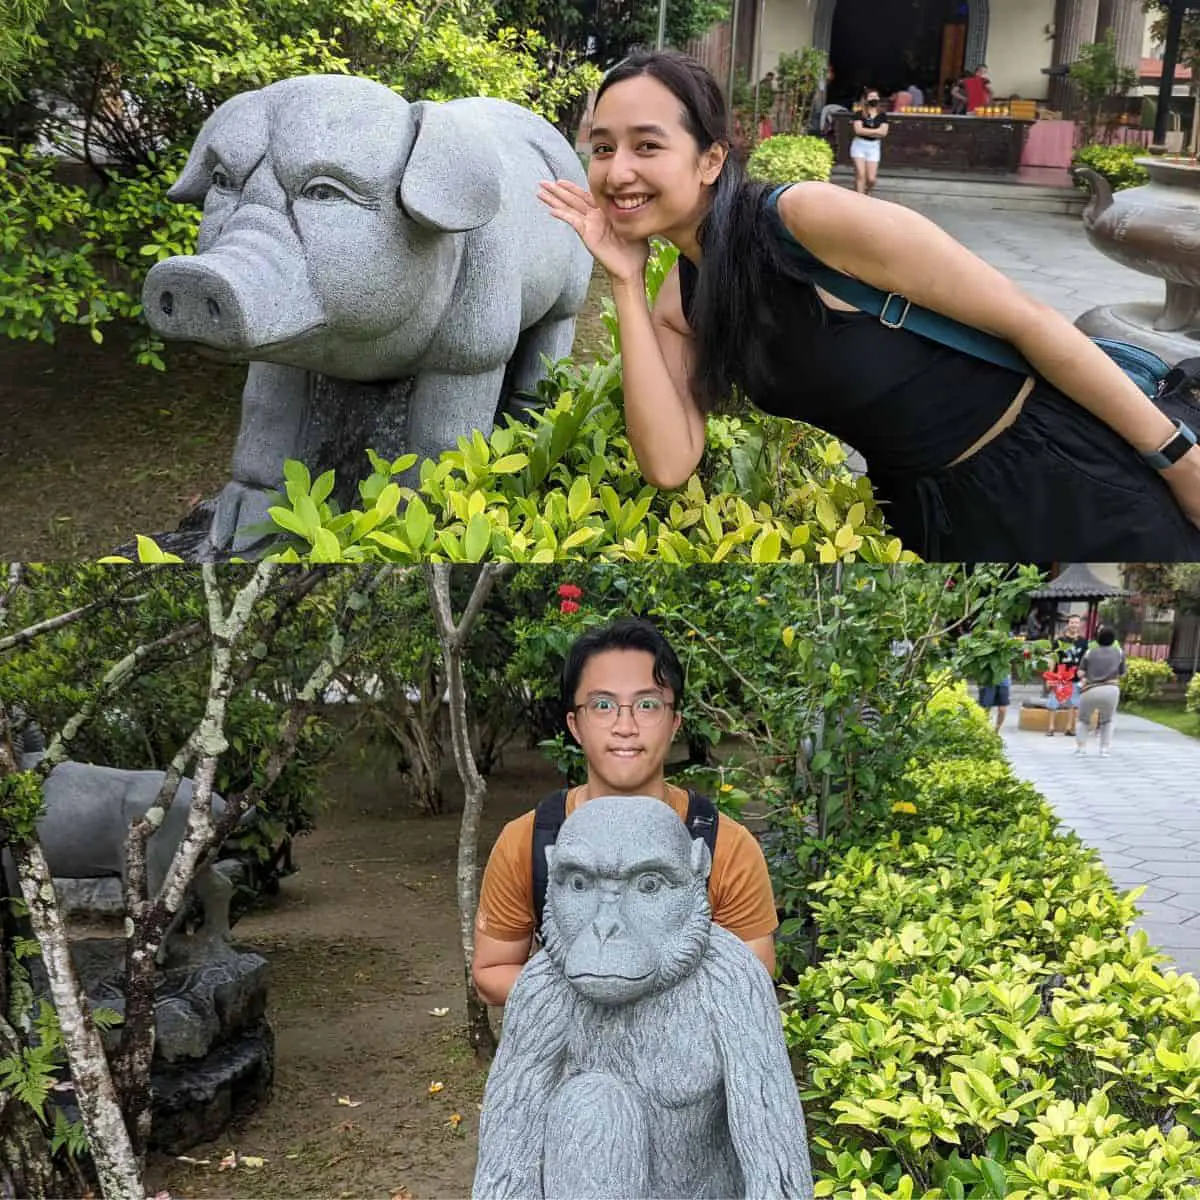 Victoria and Ruiz with pig monkey zodiac statues